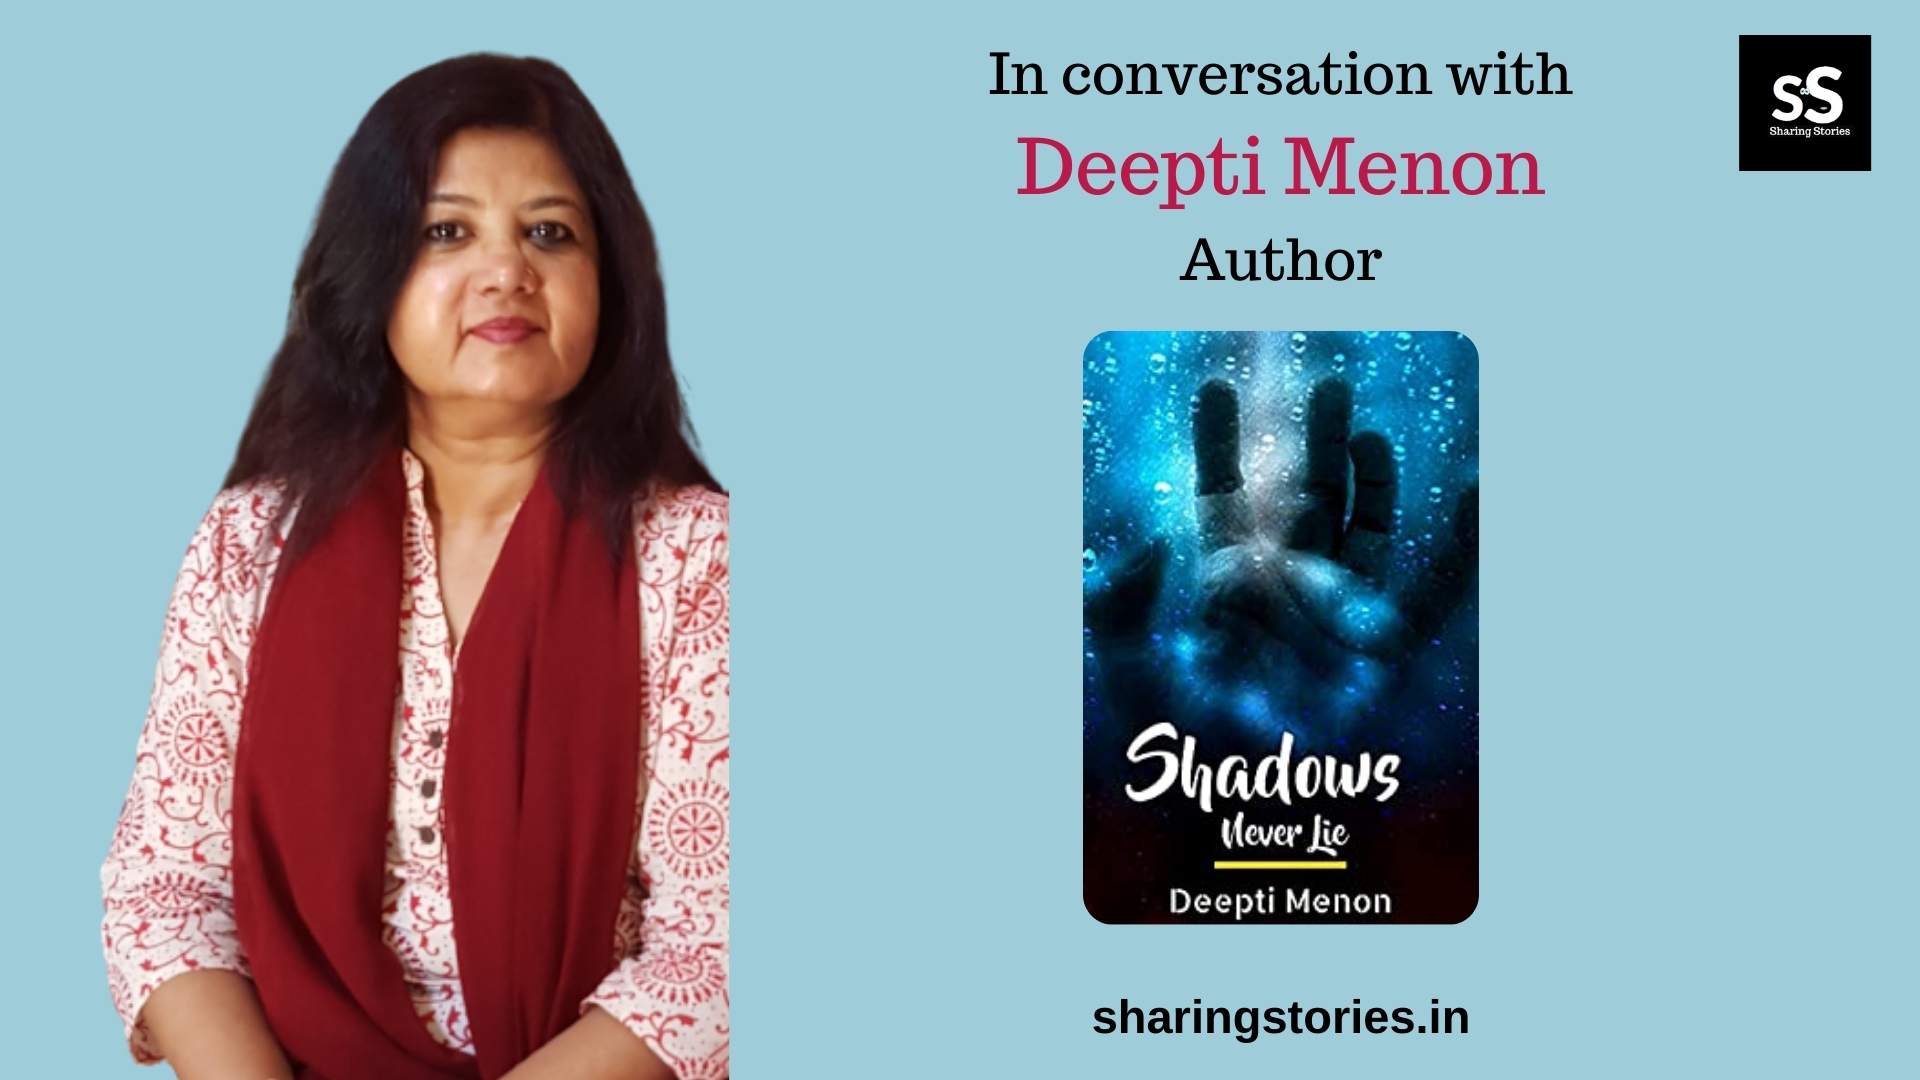 Author Deepti Menon